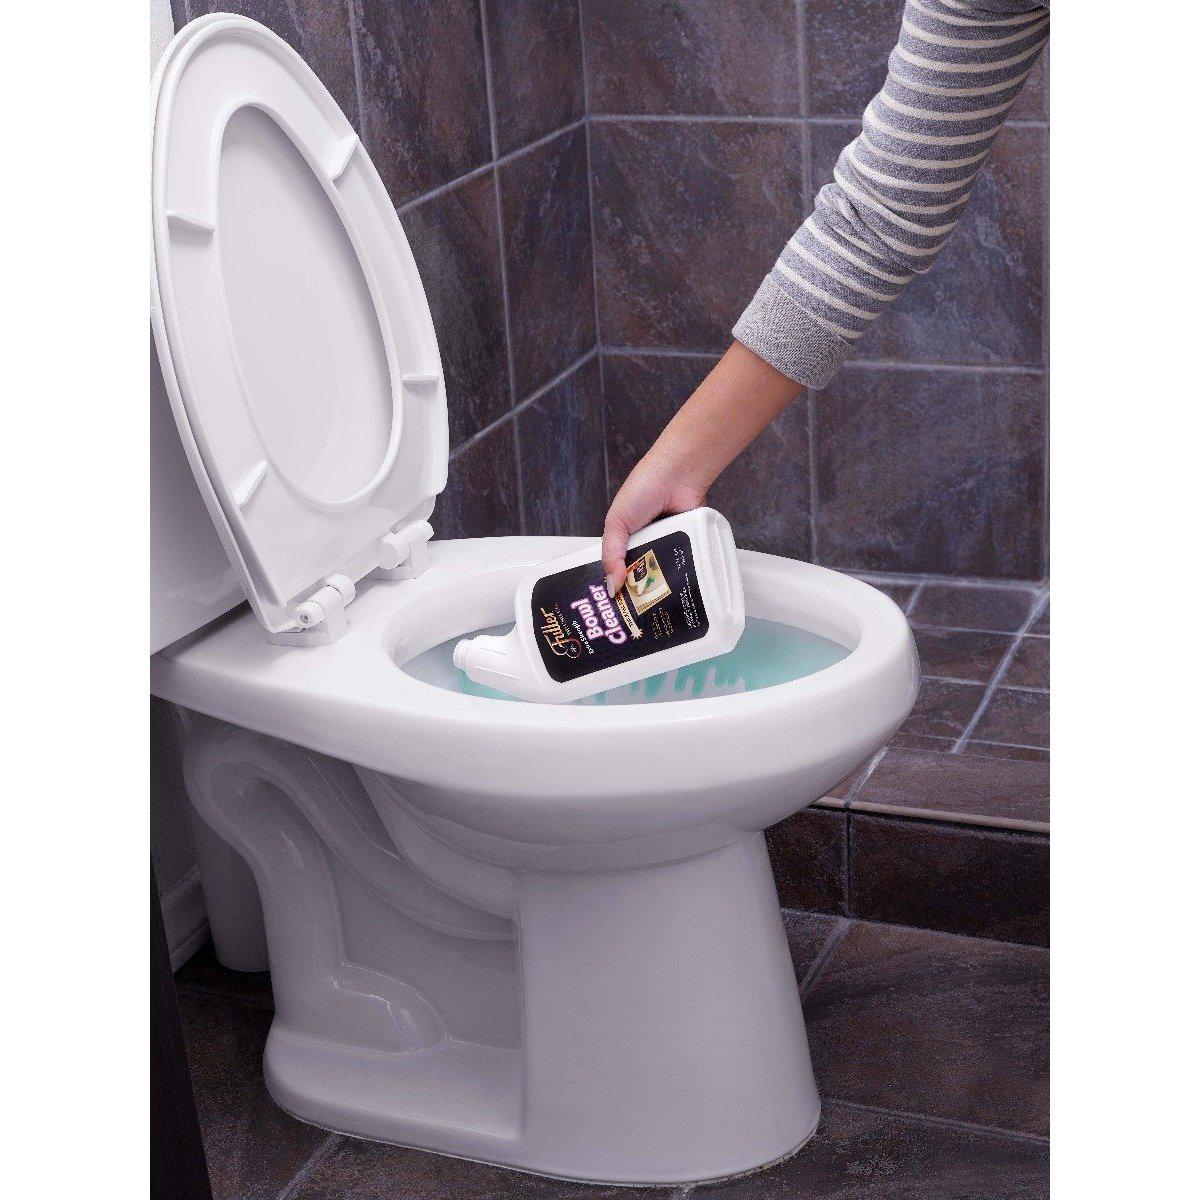 Extra Strength Toilet Bowl Cleaner - Powerful Cleaning Gel Solution - Descalcificadores y desodorizantes - Agentes de limpieza - Fuller Brush Company